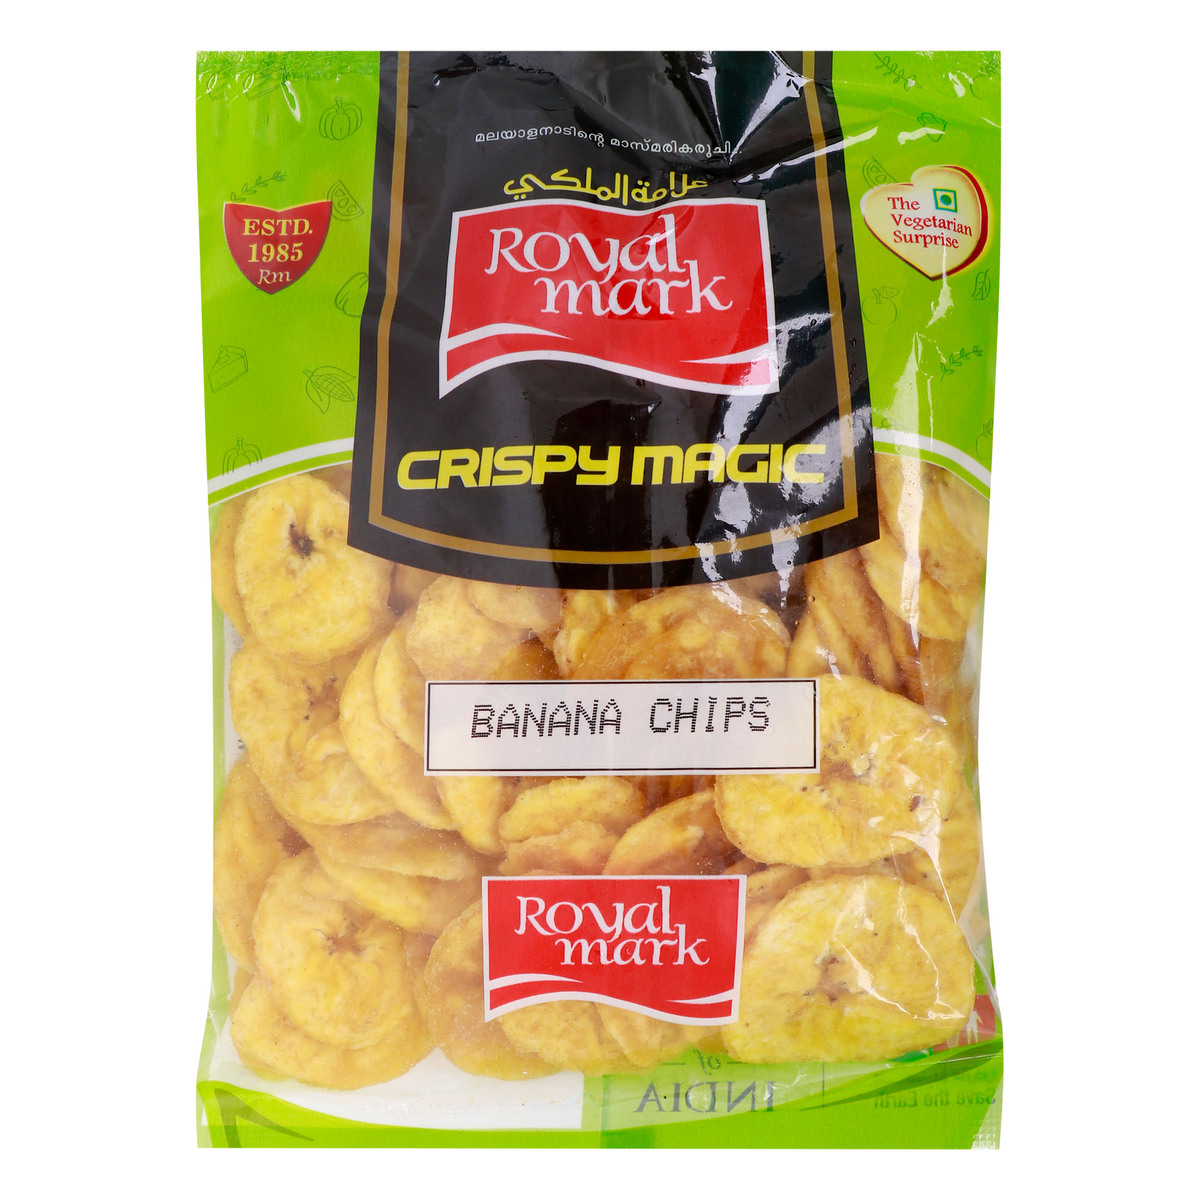 Royal Mark Crispy Magic Banana Chips, 125 g